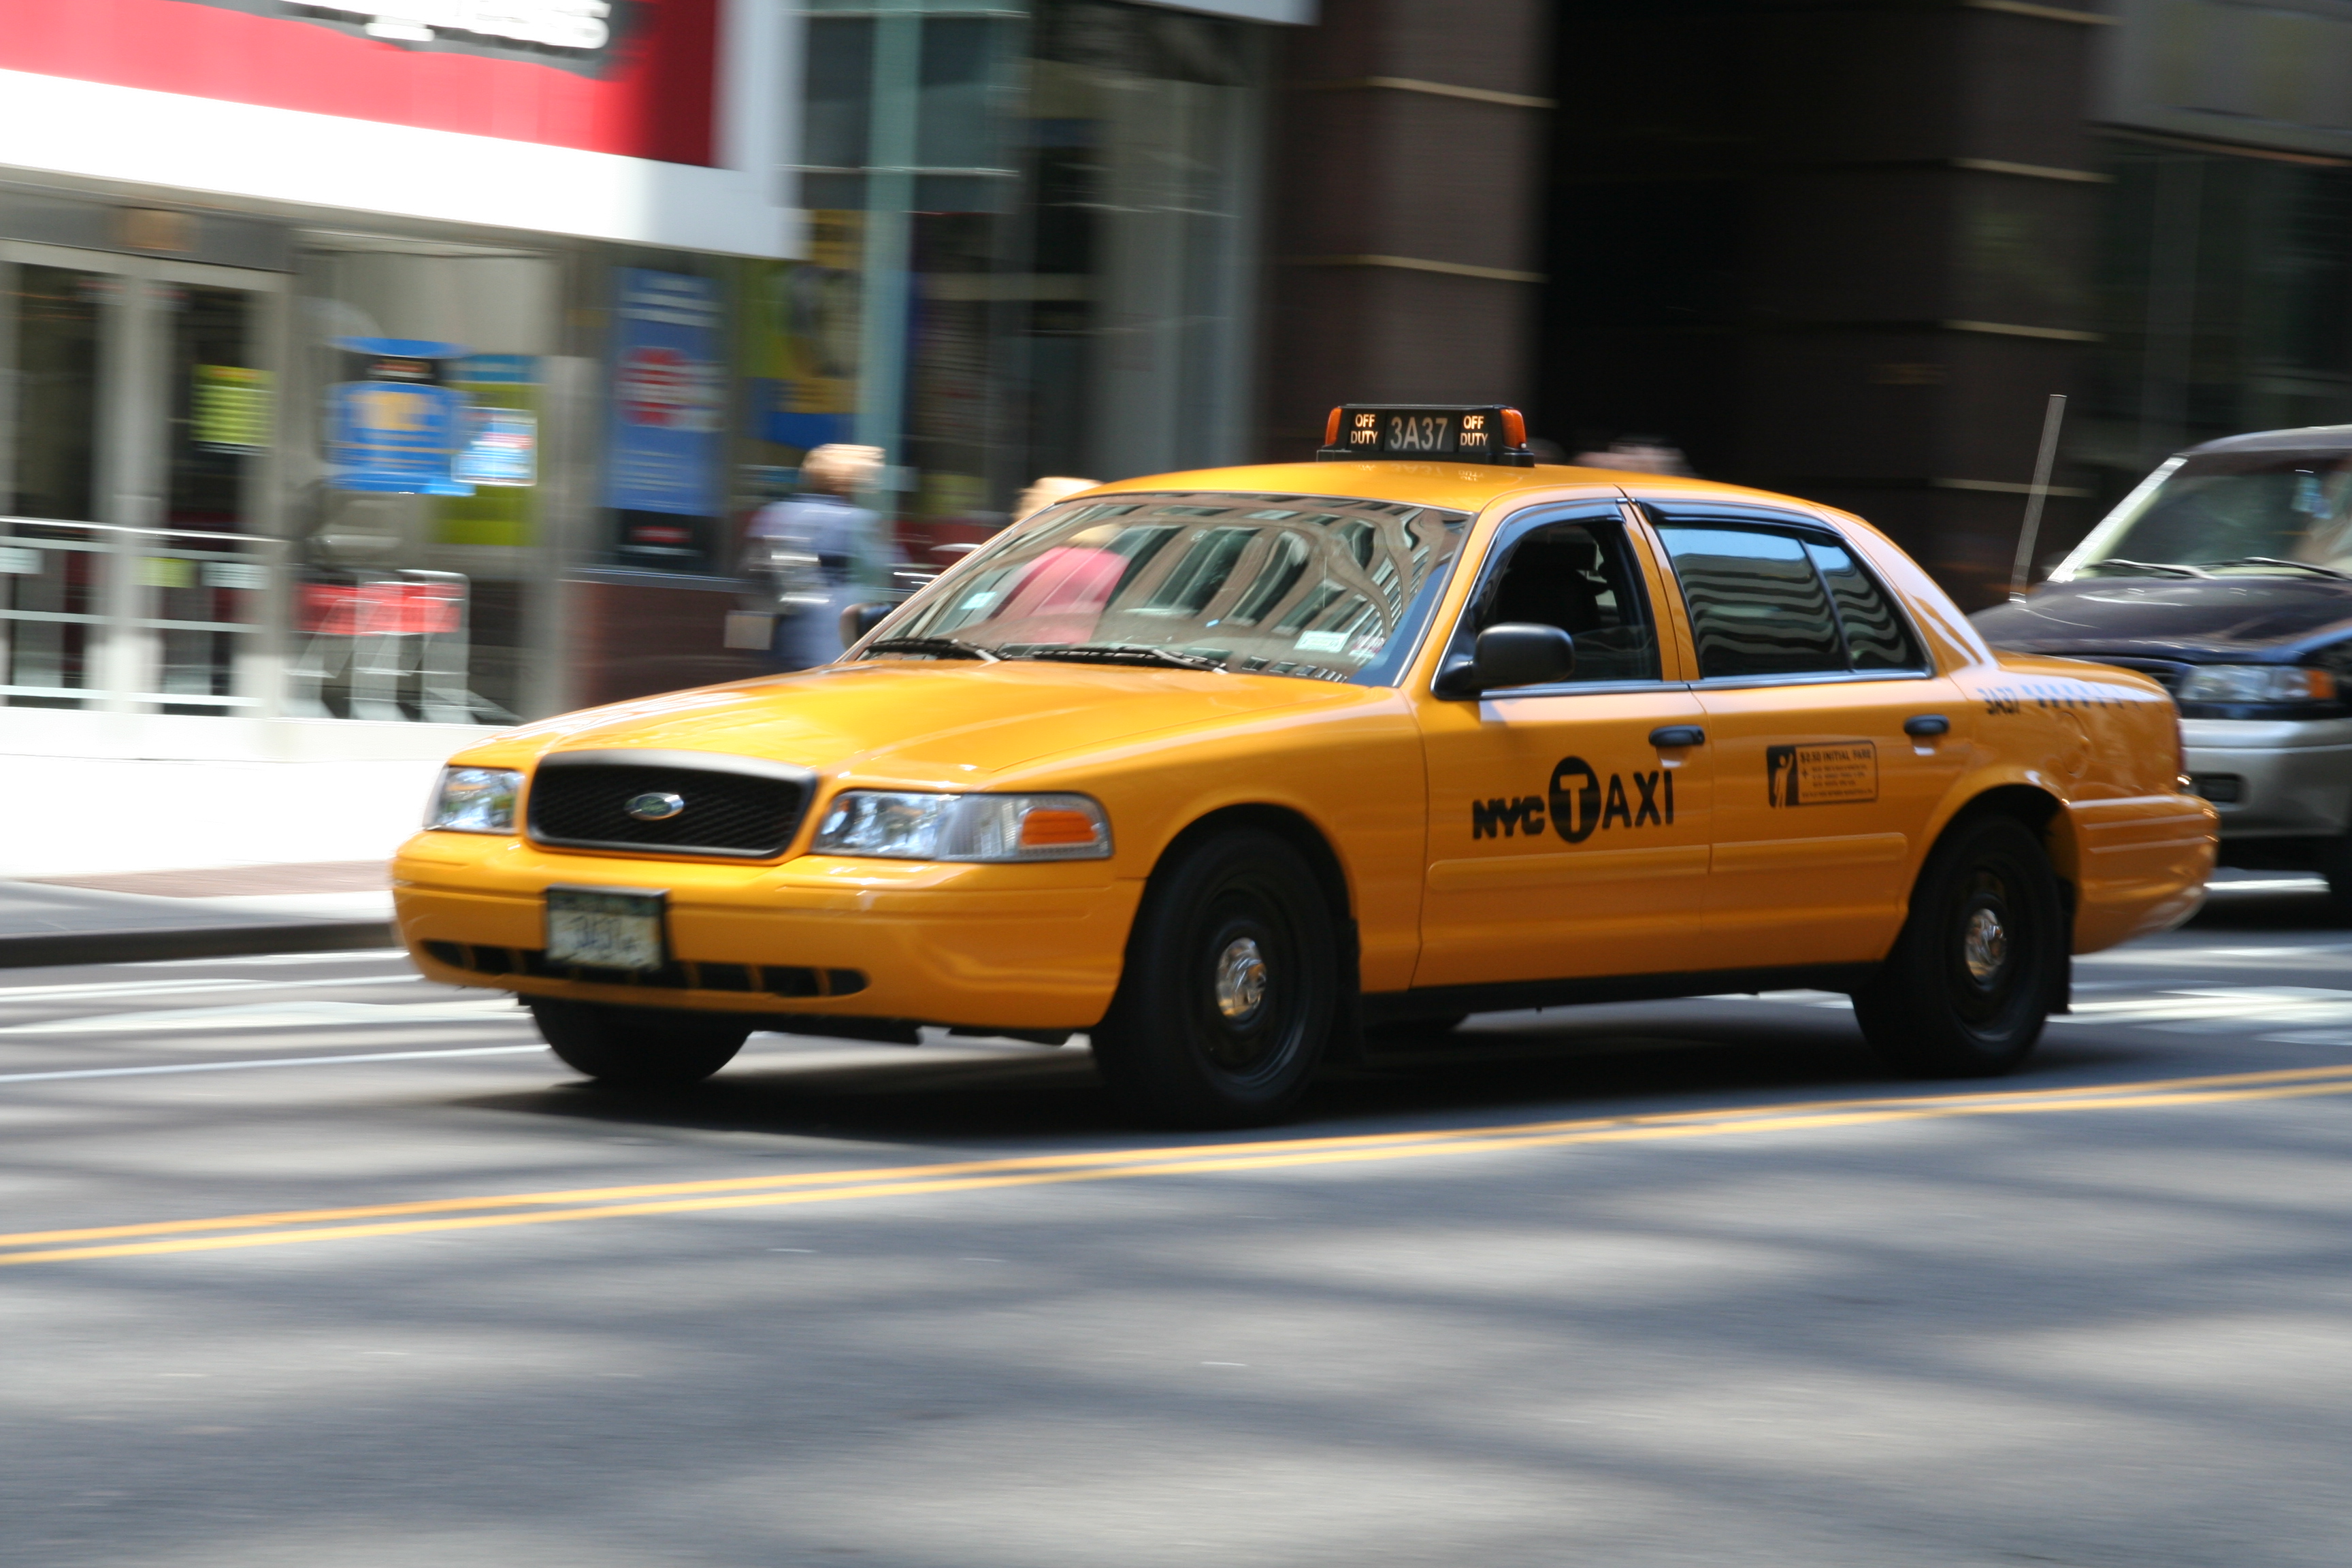 12 такси 3 зеленых 6 желтых. 2001 Crown Victoria Taxi. Ford Crown Victoria Taxi New York. Ford Crown Victoria Taxi салон. 1993 Crown Victoria Taxi.